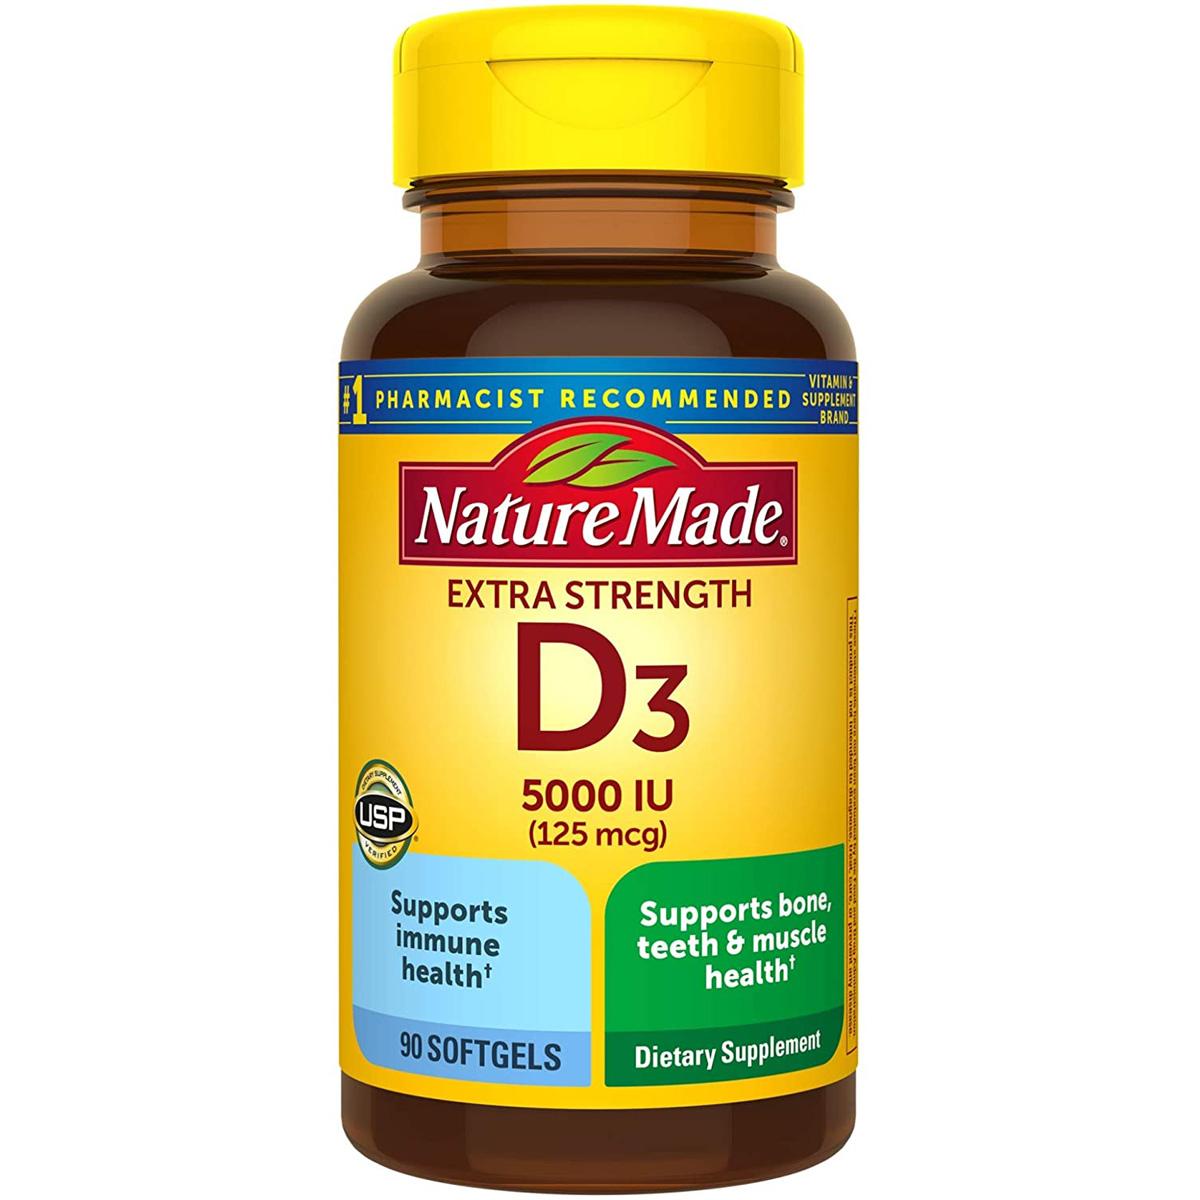 90 Nature Made Extra Strength Vitamin D3 5000 IU for $9.11 Shipped